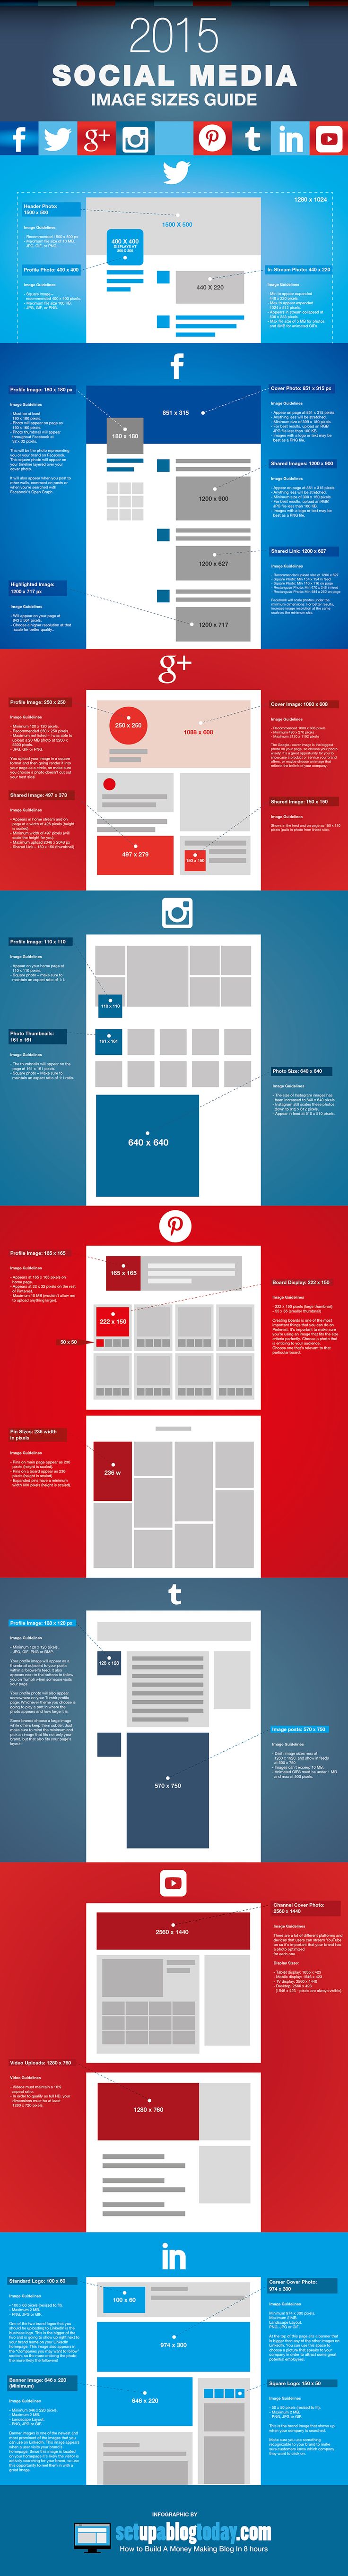 2015 Social Media Image Size Guide